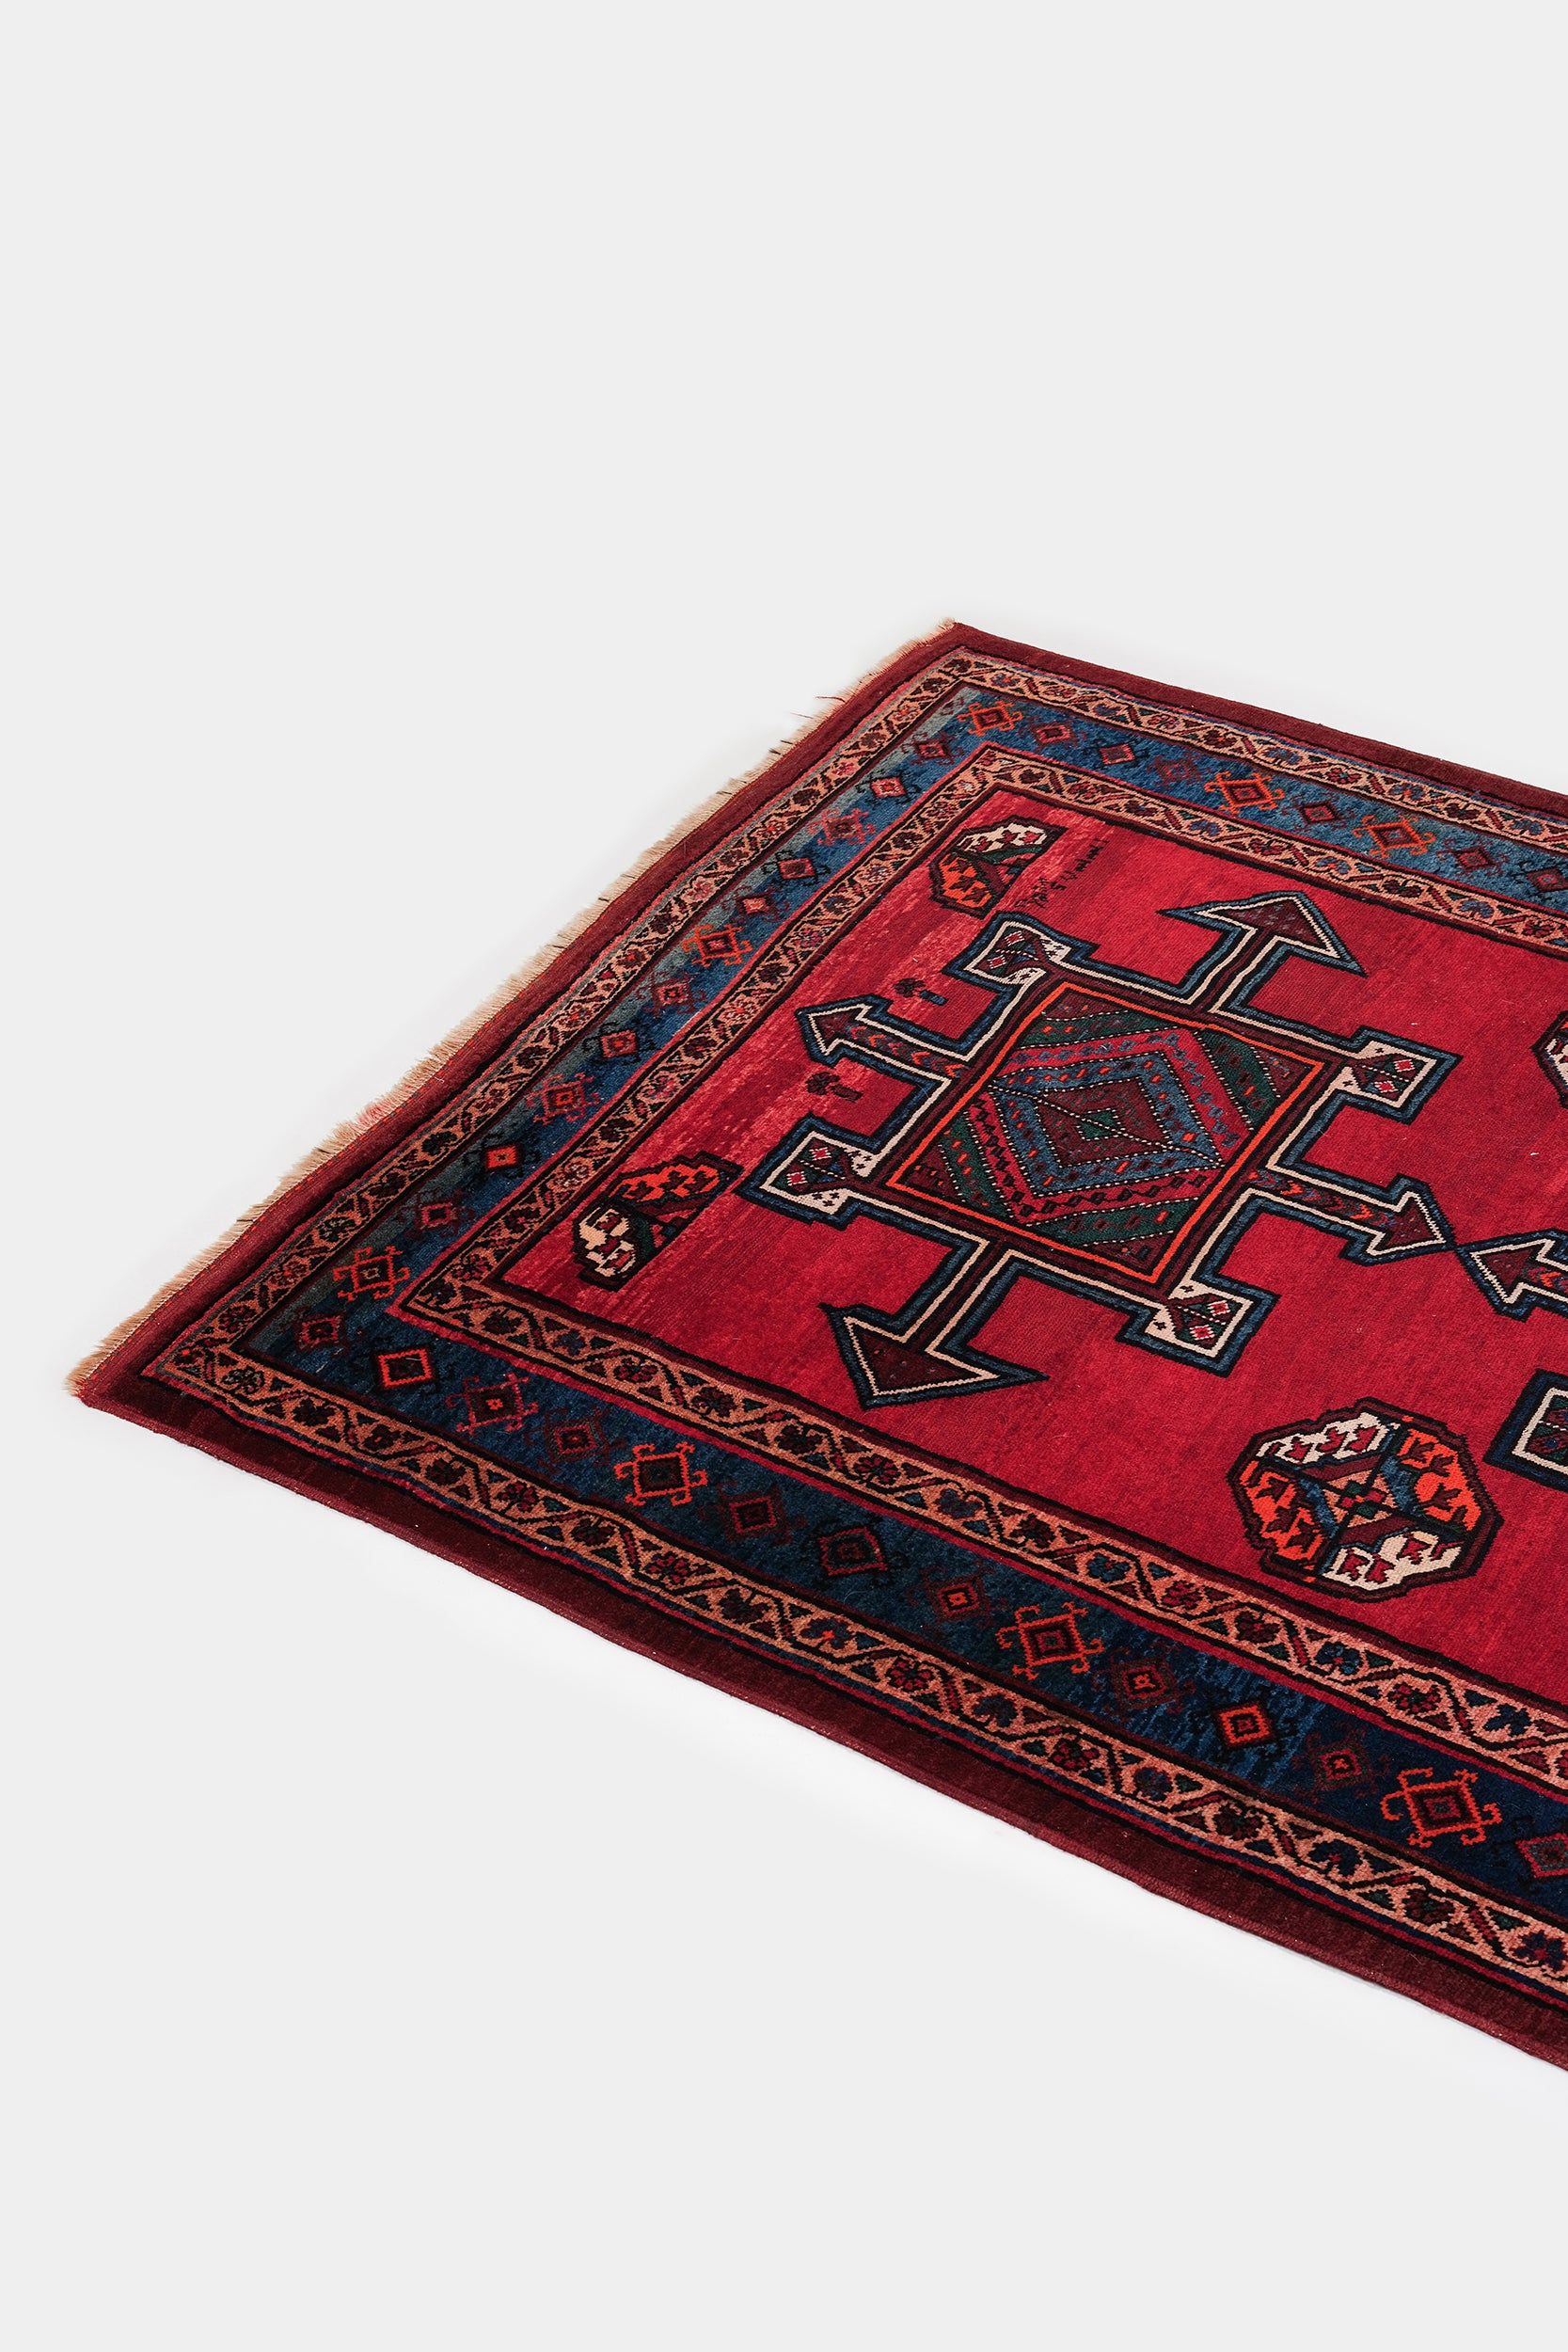 Large Carpet, Afghan, 1910